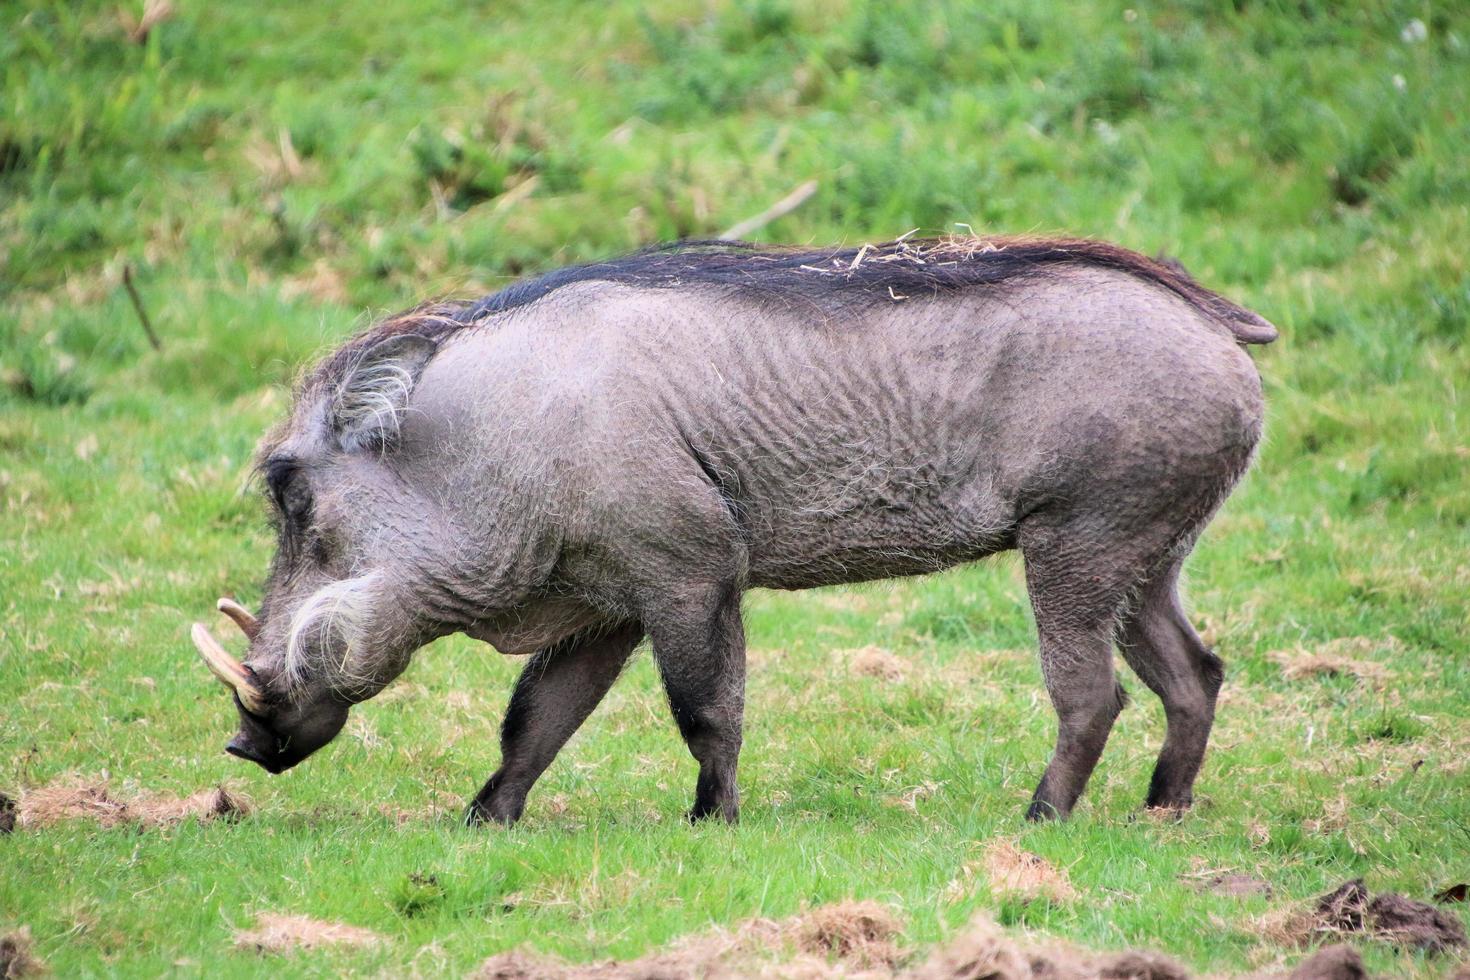 A view of a Wart Hog photo